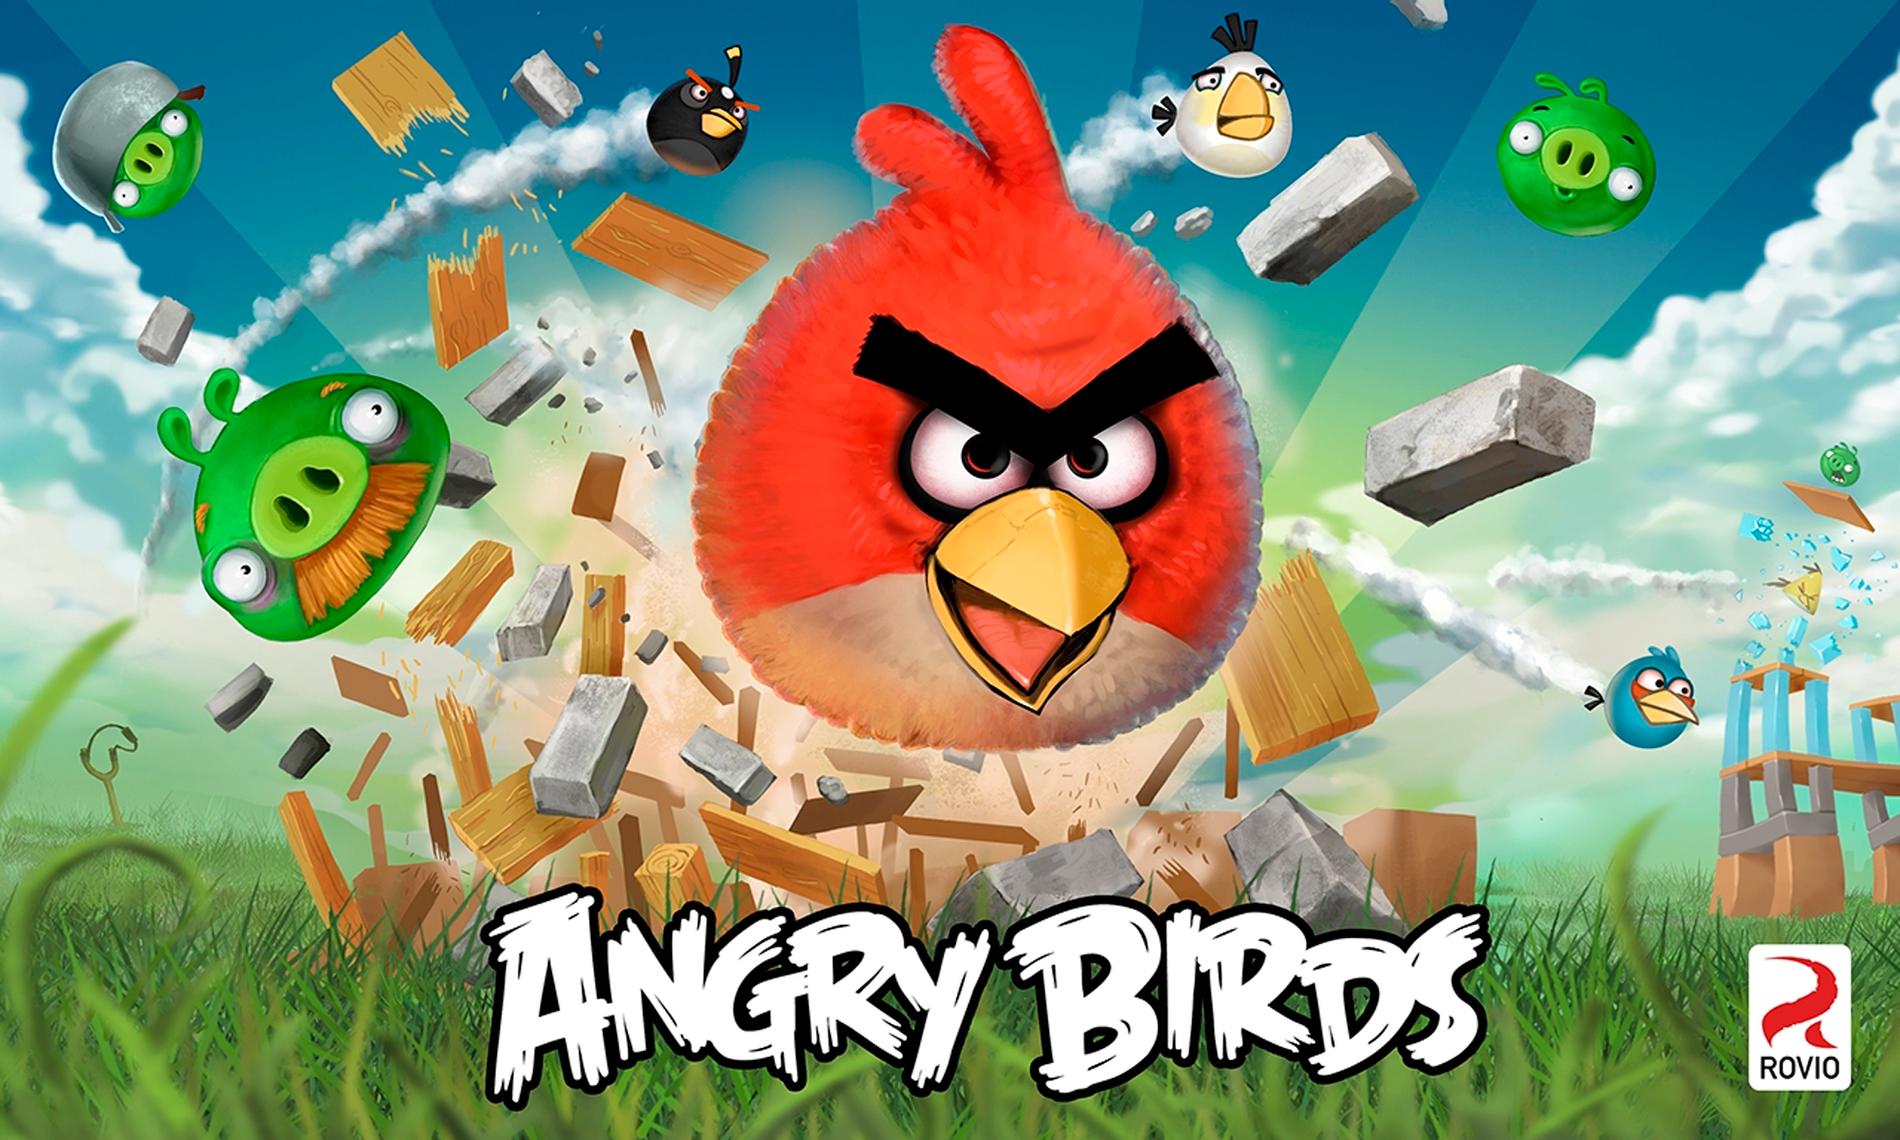 Succéspelet ”Angry birds” har laddats ned 1,7 miljarder gånger.